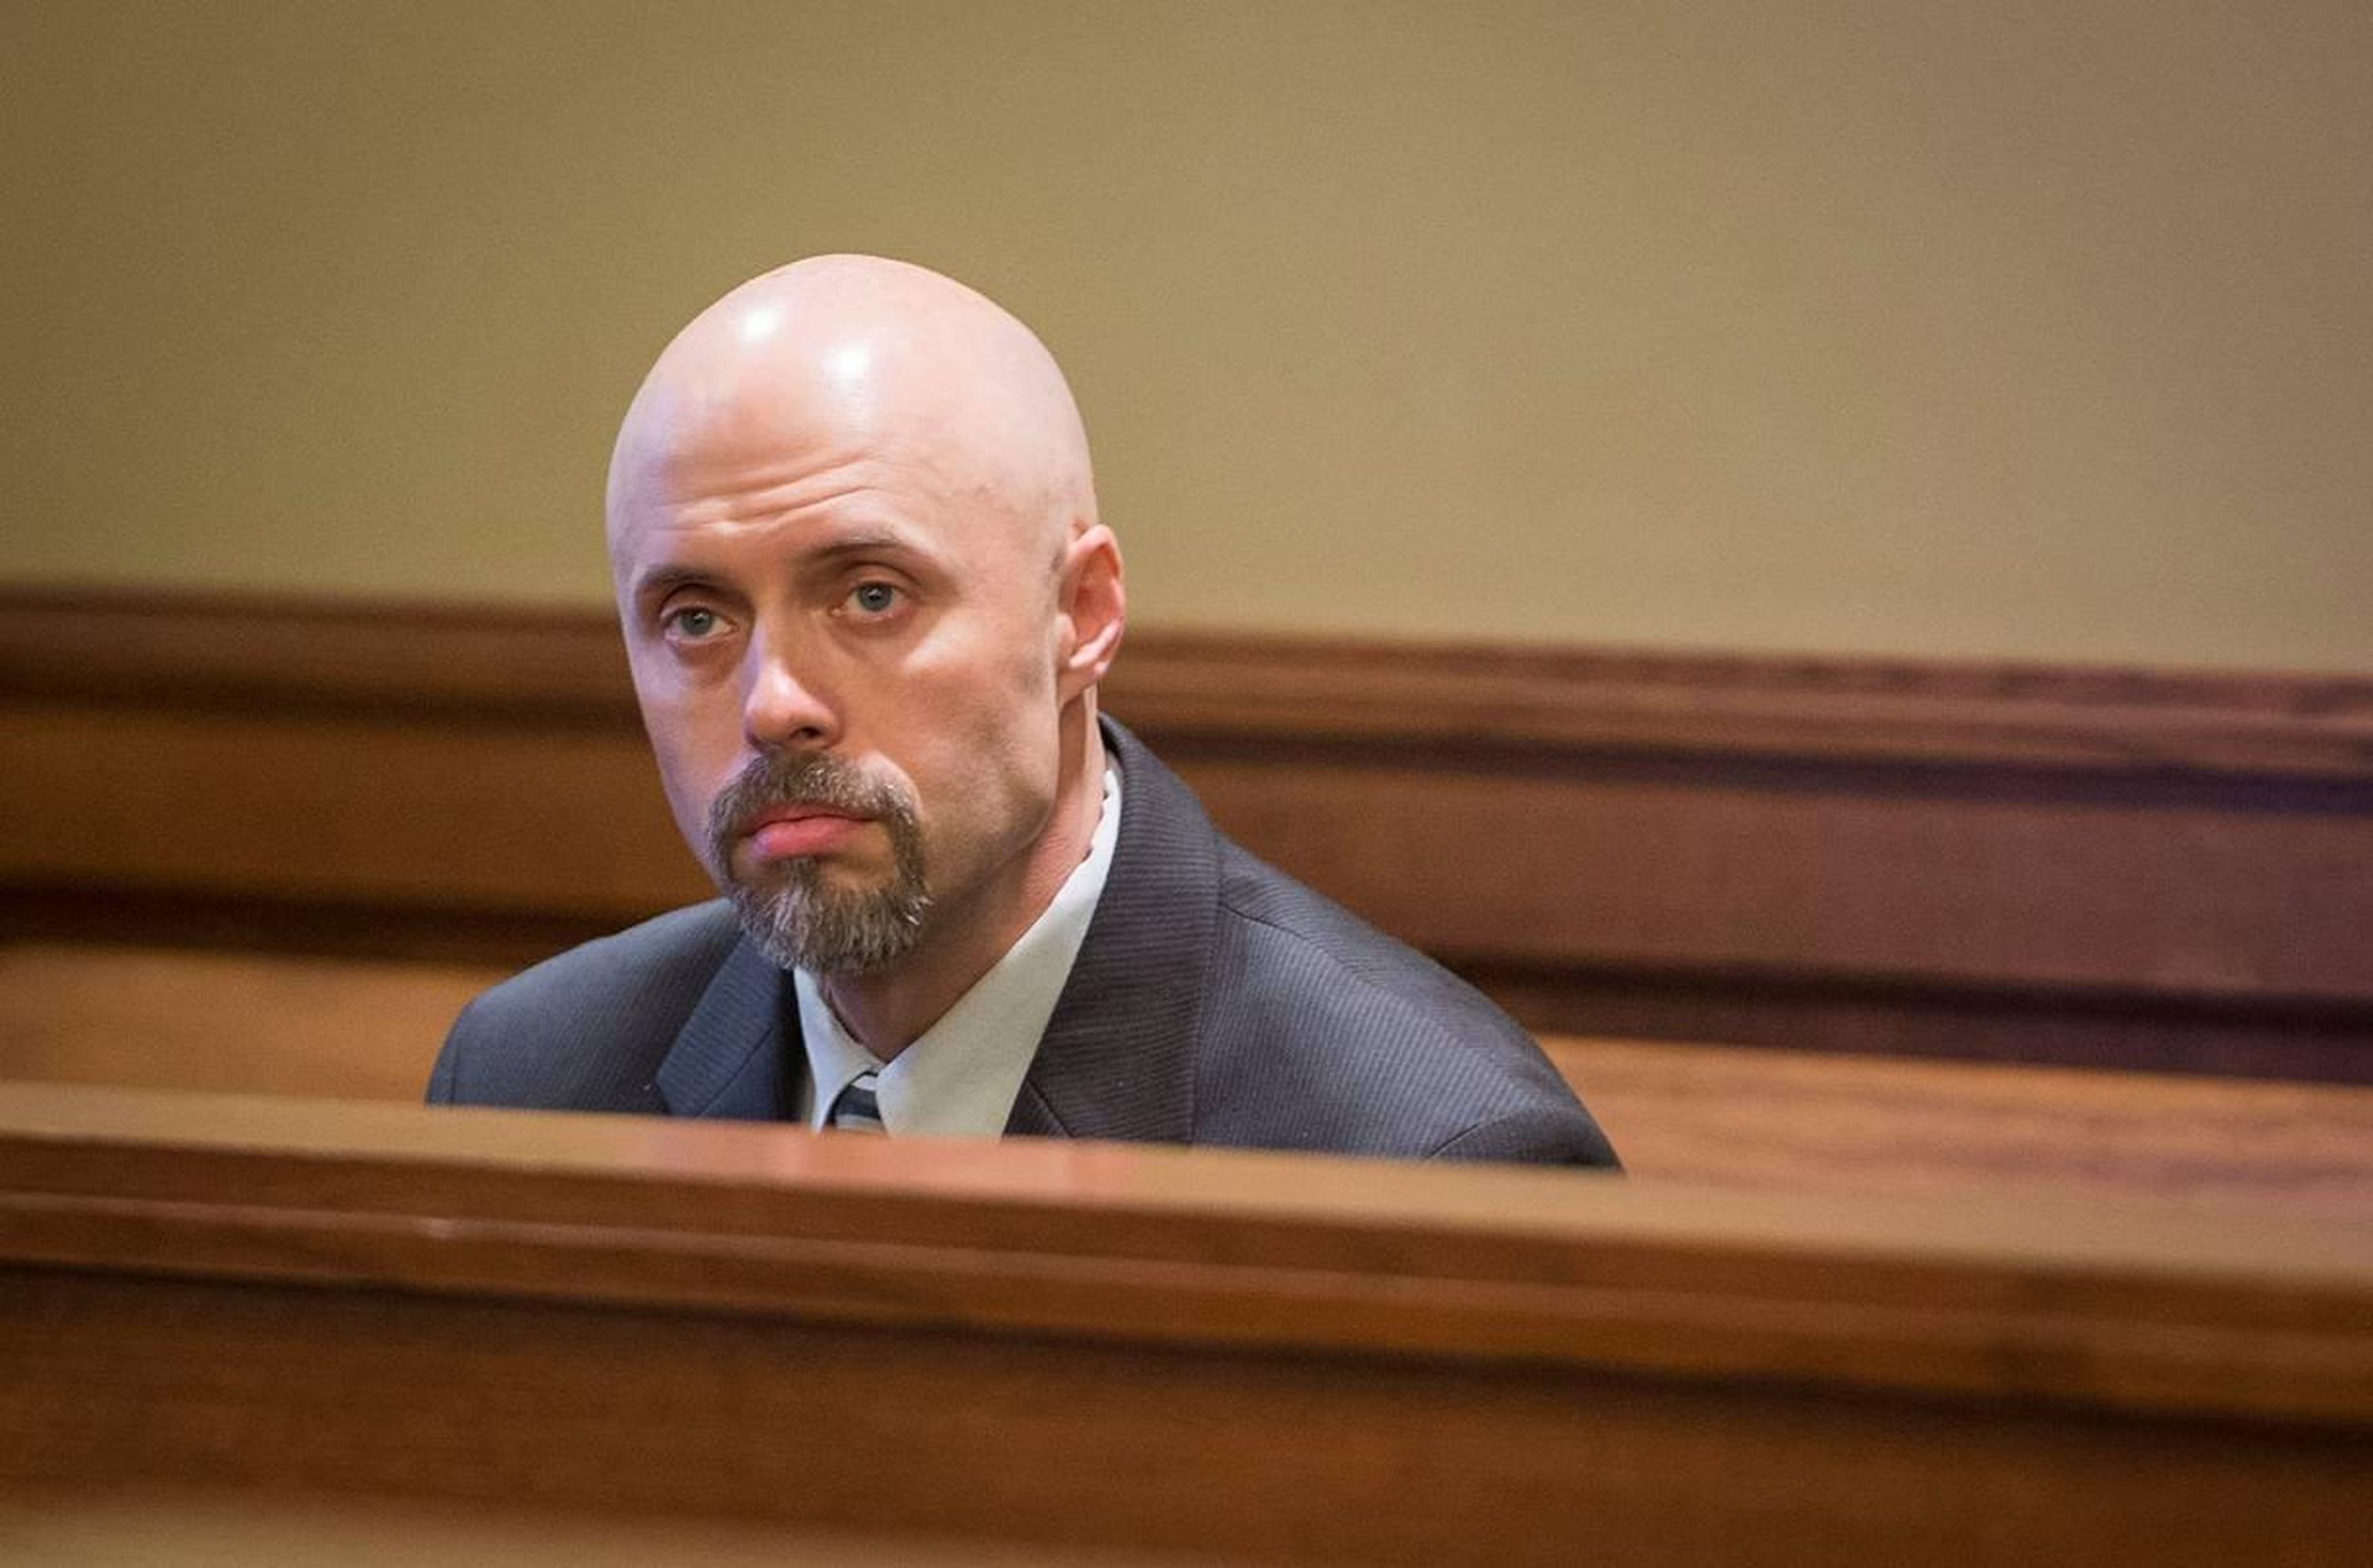 Judge Declares Mistrial In Sex Assault Case Against Former Spokane